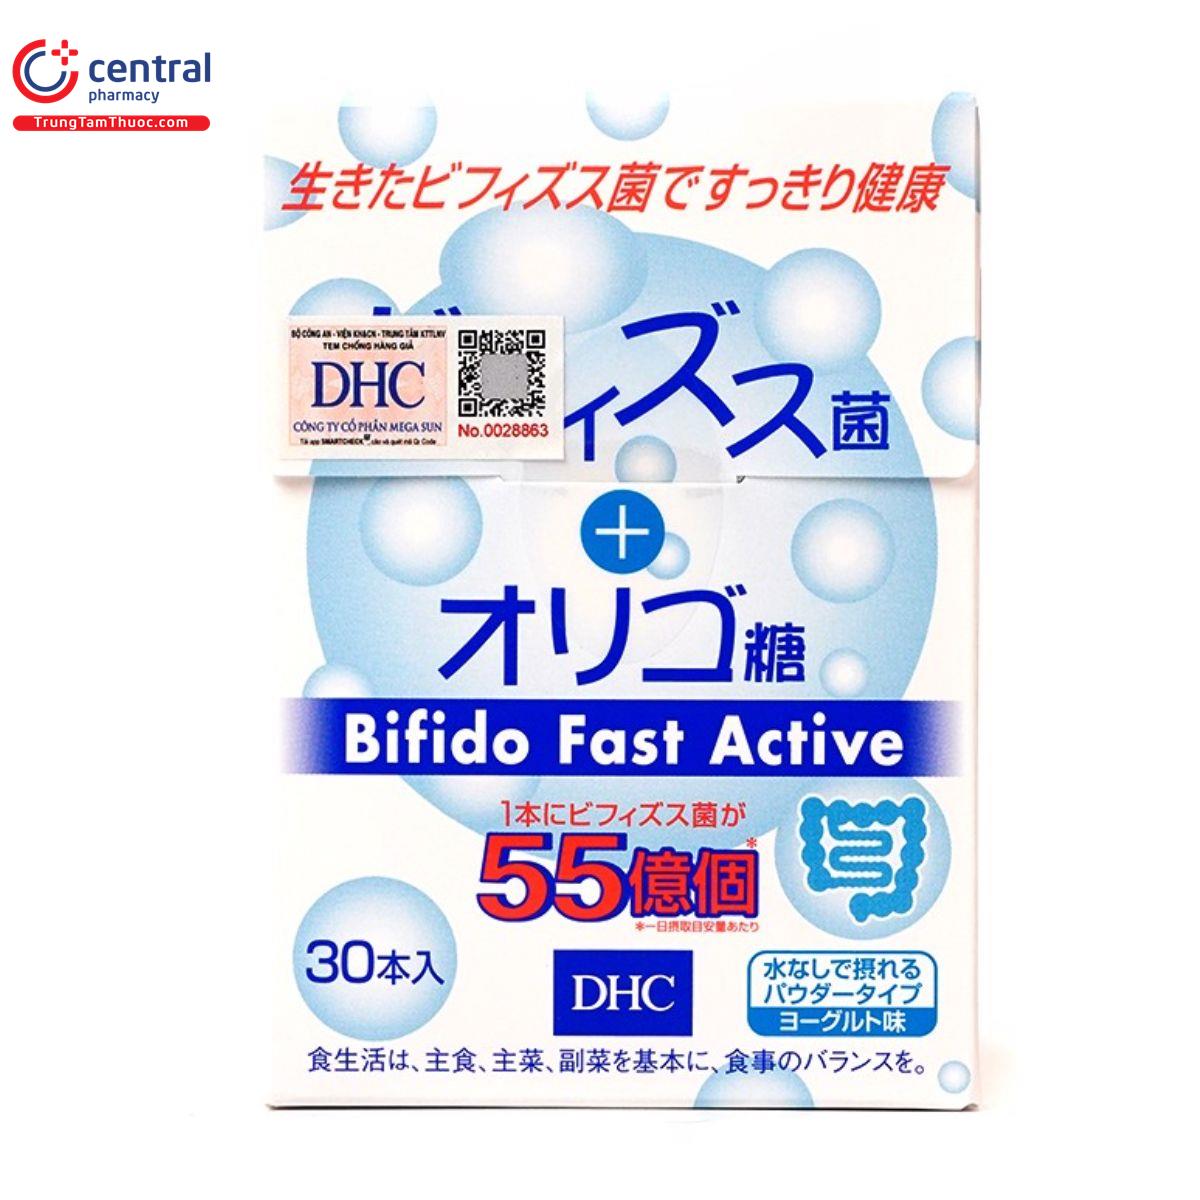 dhc bifido fast active 4 G2876